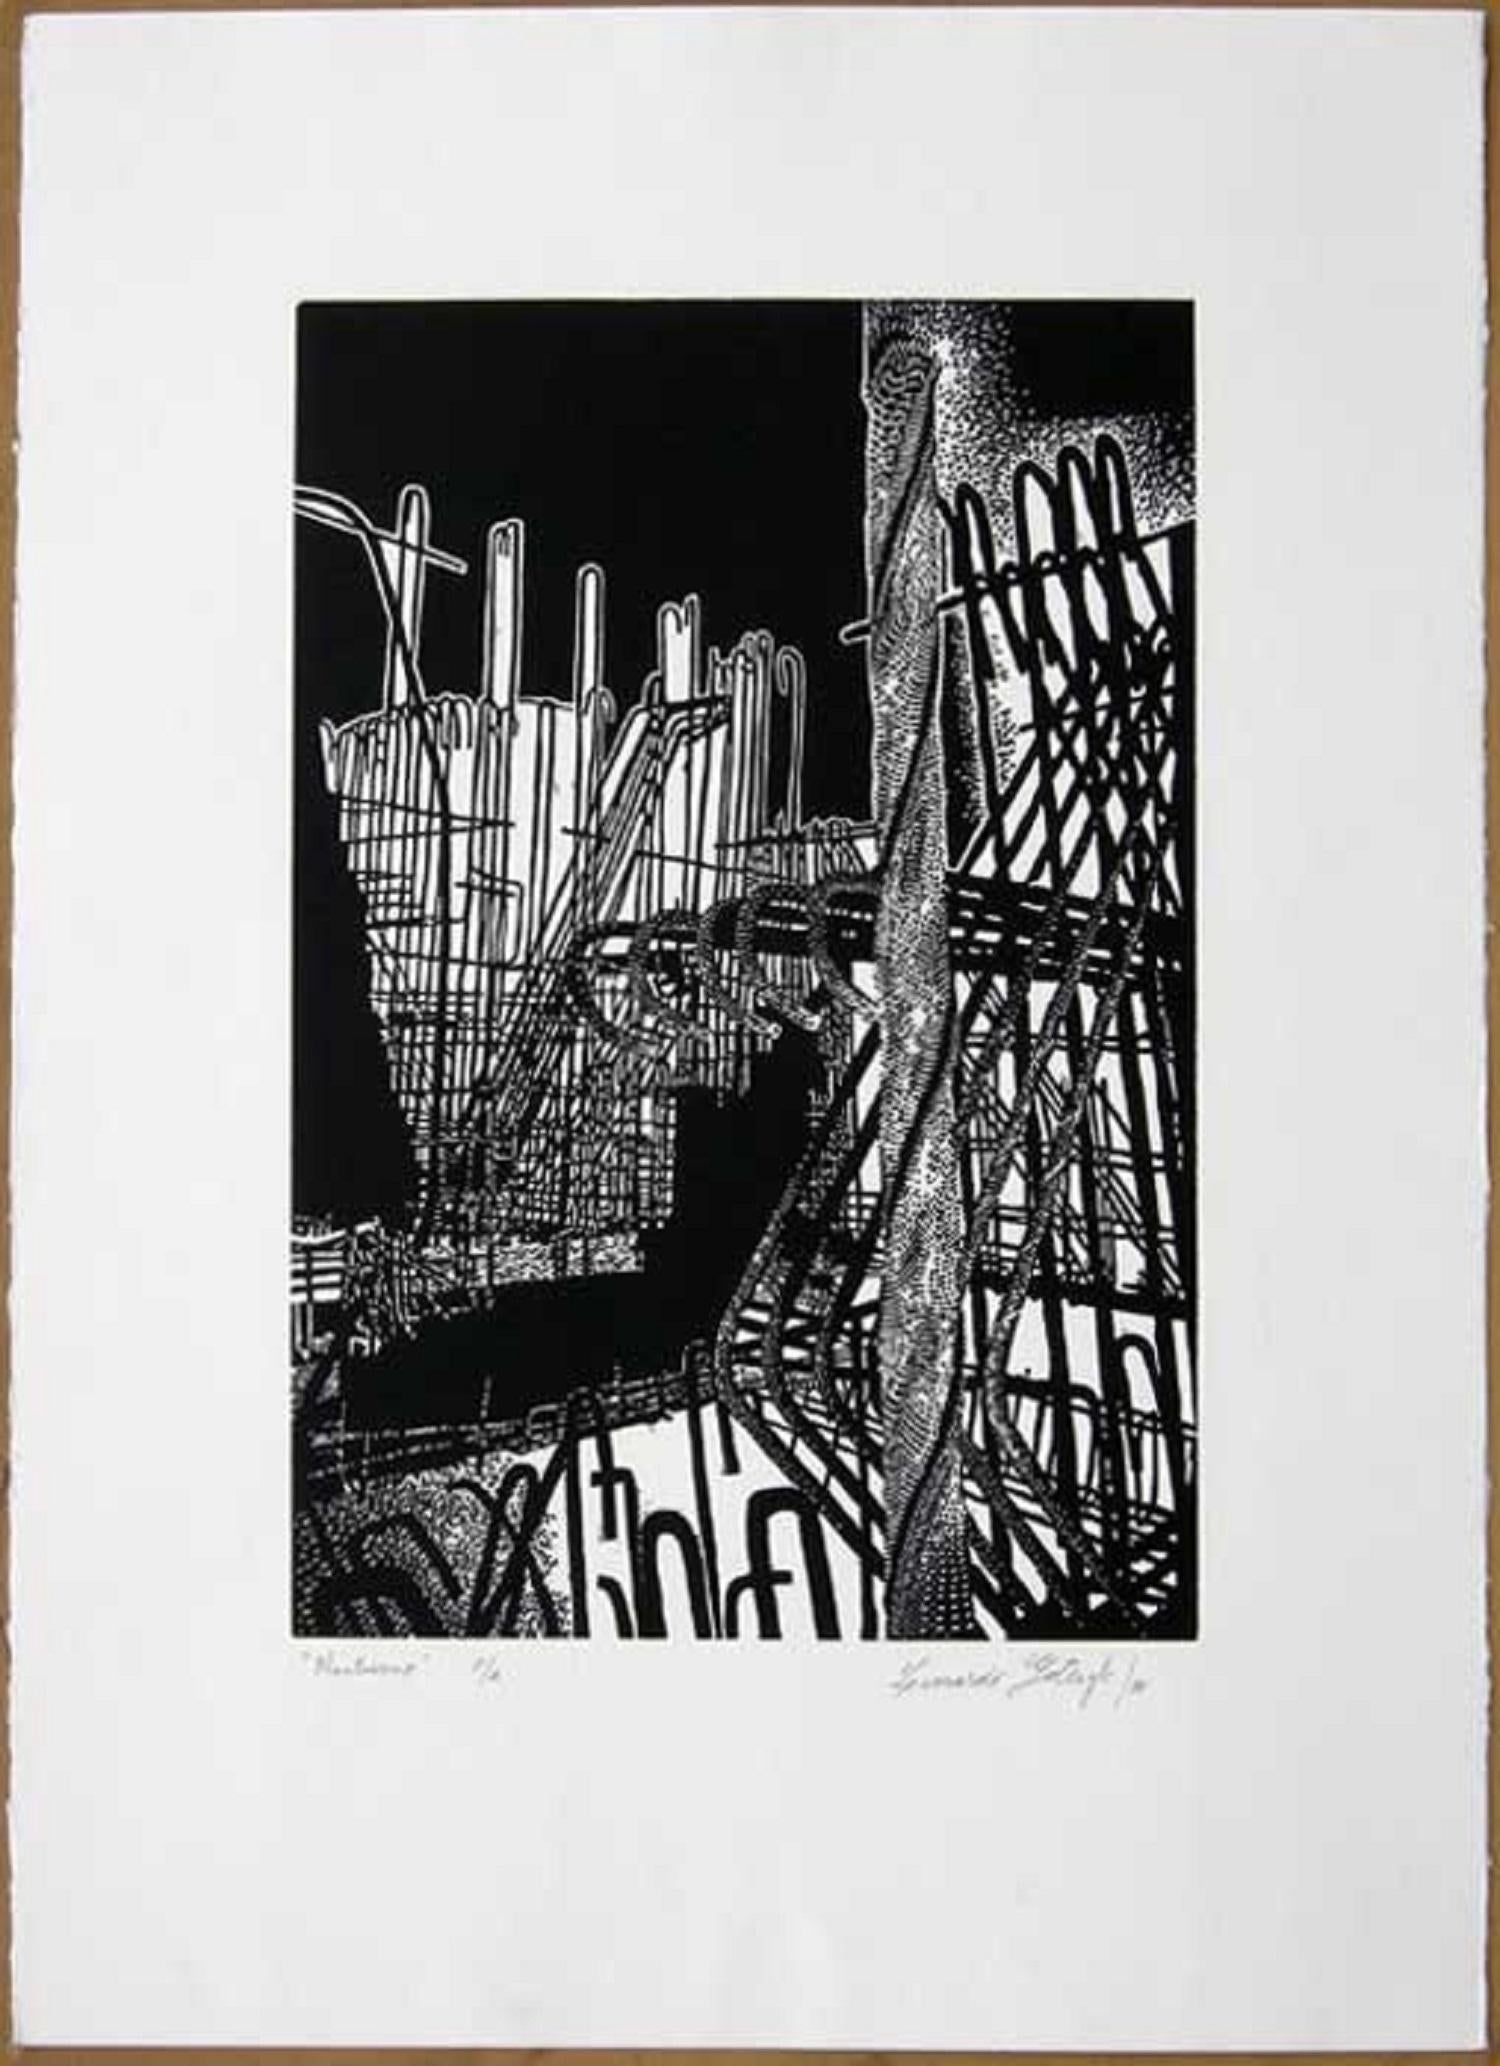 Leonardo Gotleyb (Argentina, 1958)
'Nocturno', 2000
woodcut on paper Velin Arches 300 g.
27.6 x 19.7 in. (70 x 50 cm.)
Edition of 25
ID: GOT-304
Unframed